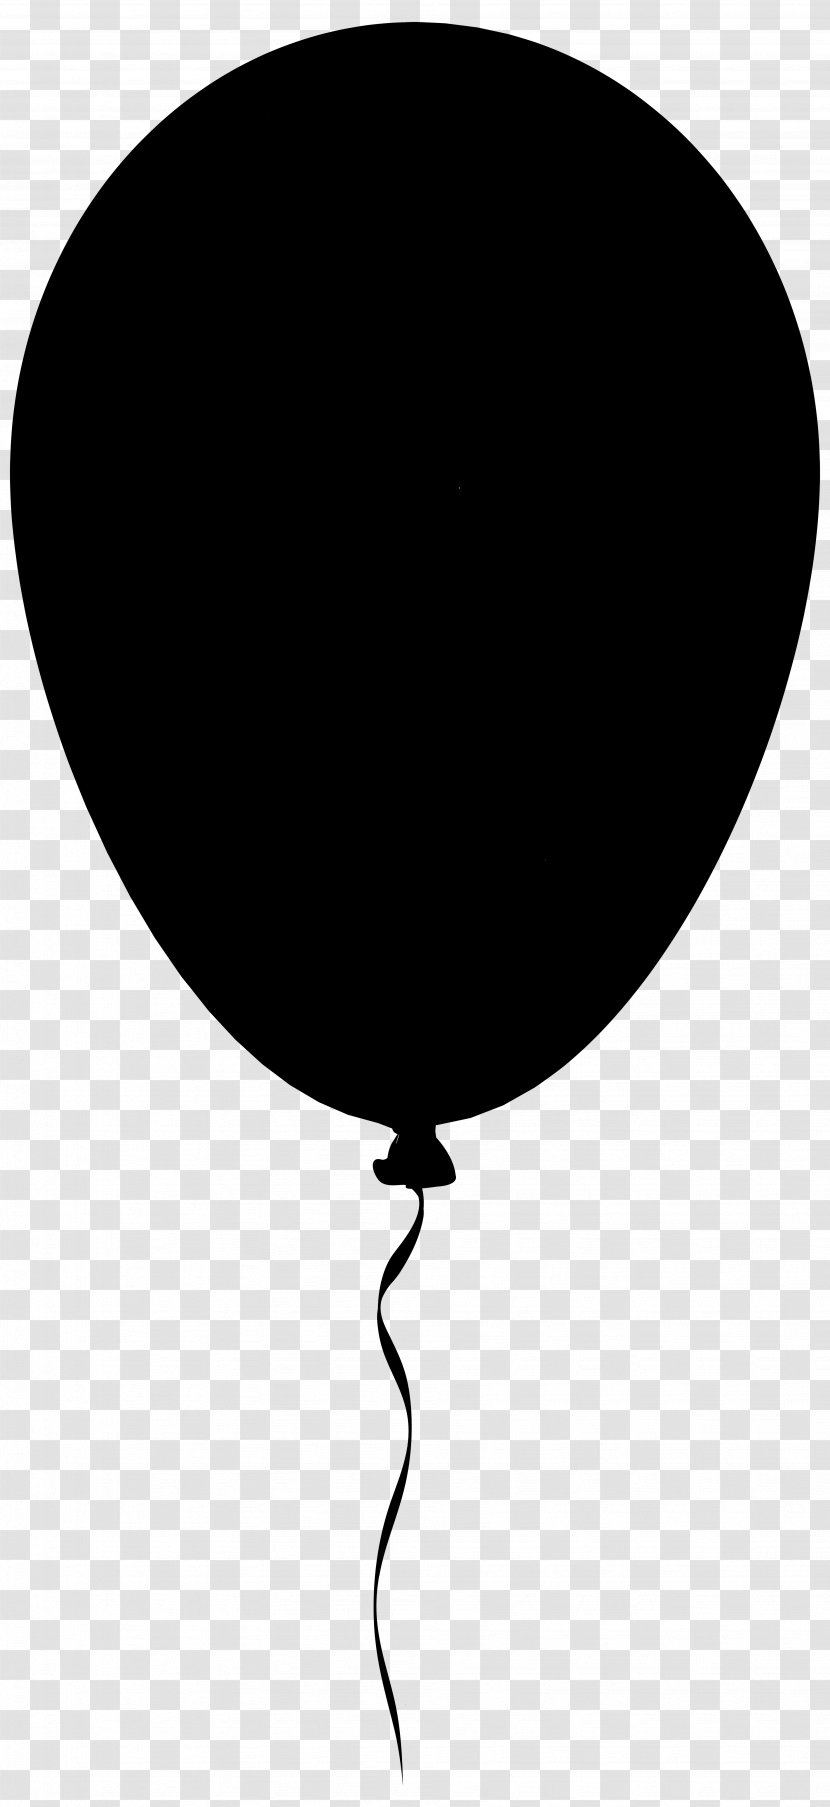 Balloon Consumer Product Mail Order Rakuten - Costume - Black Transparent PNG